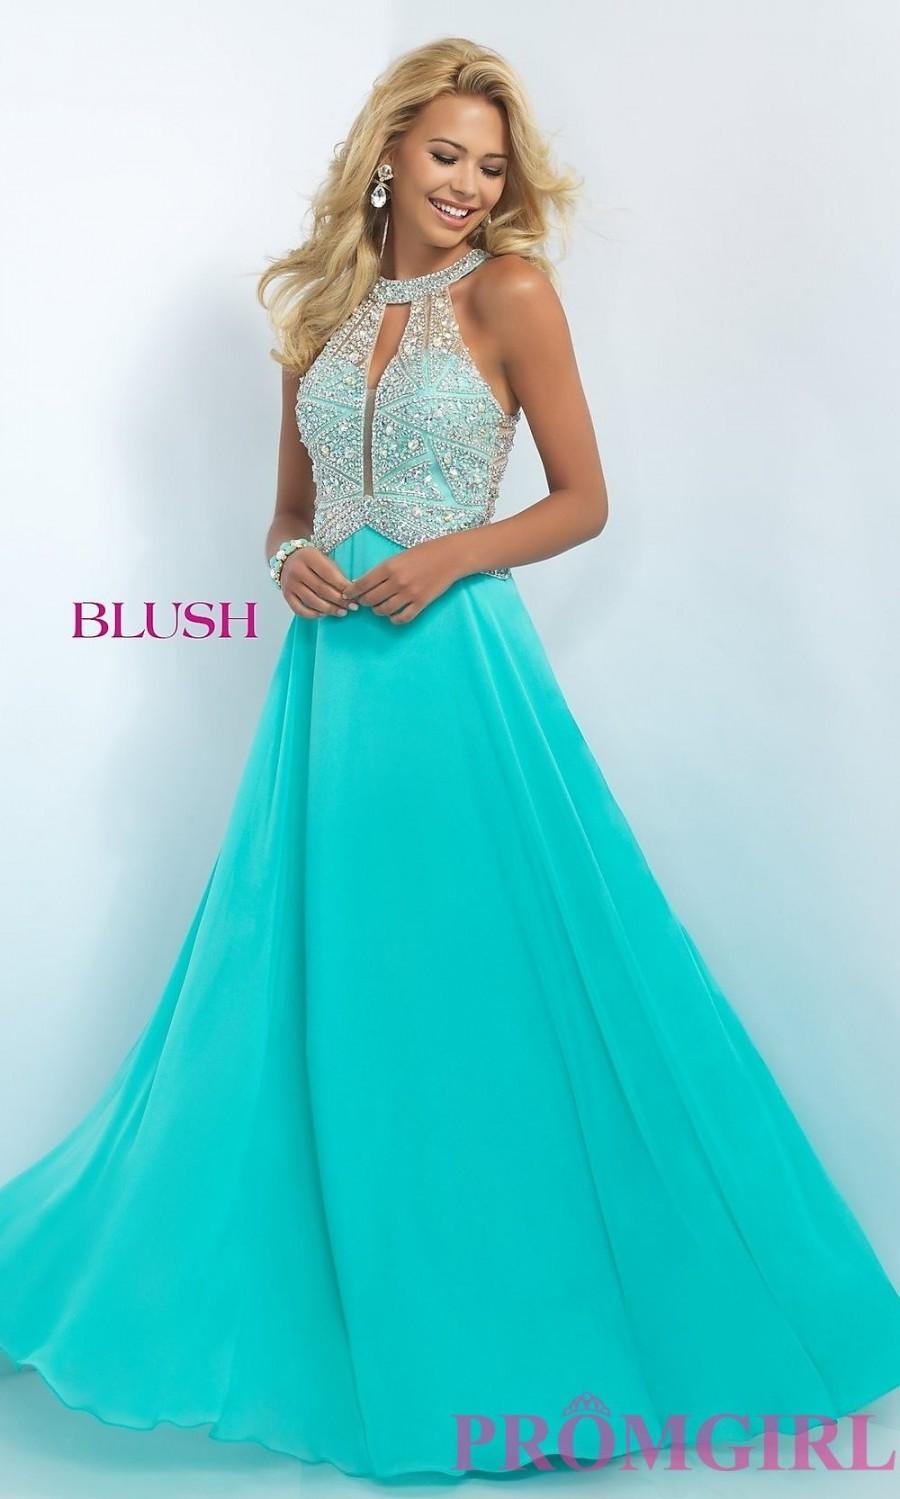 زفاف - Embellished Illusion Bodice Floor Length Chiffon Dress by Blush - Discount Evening Dresses 